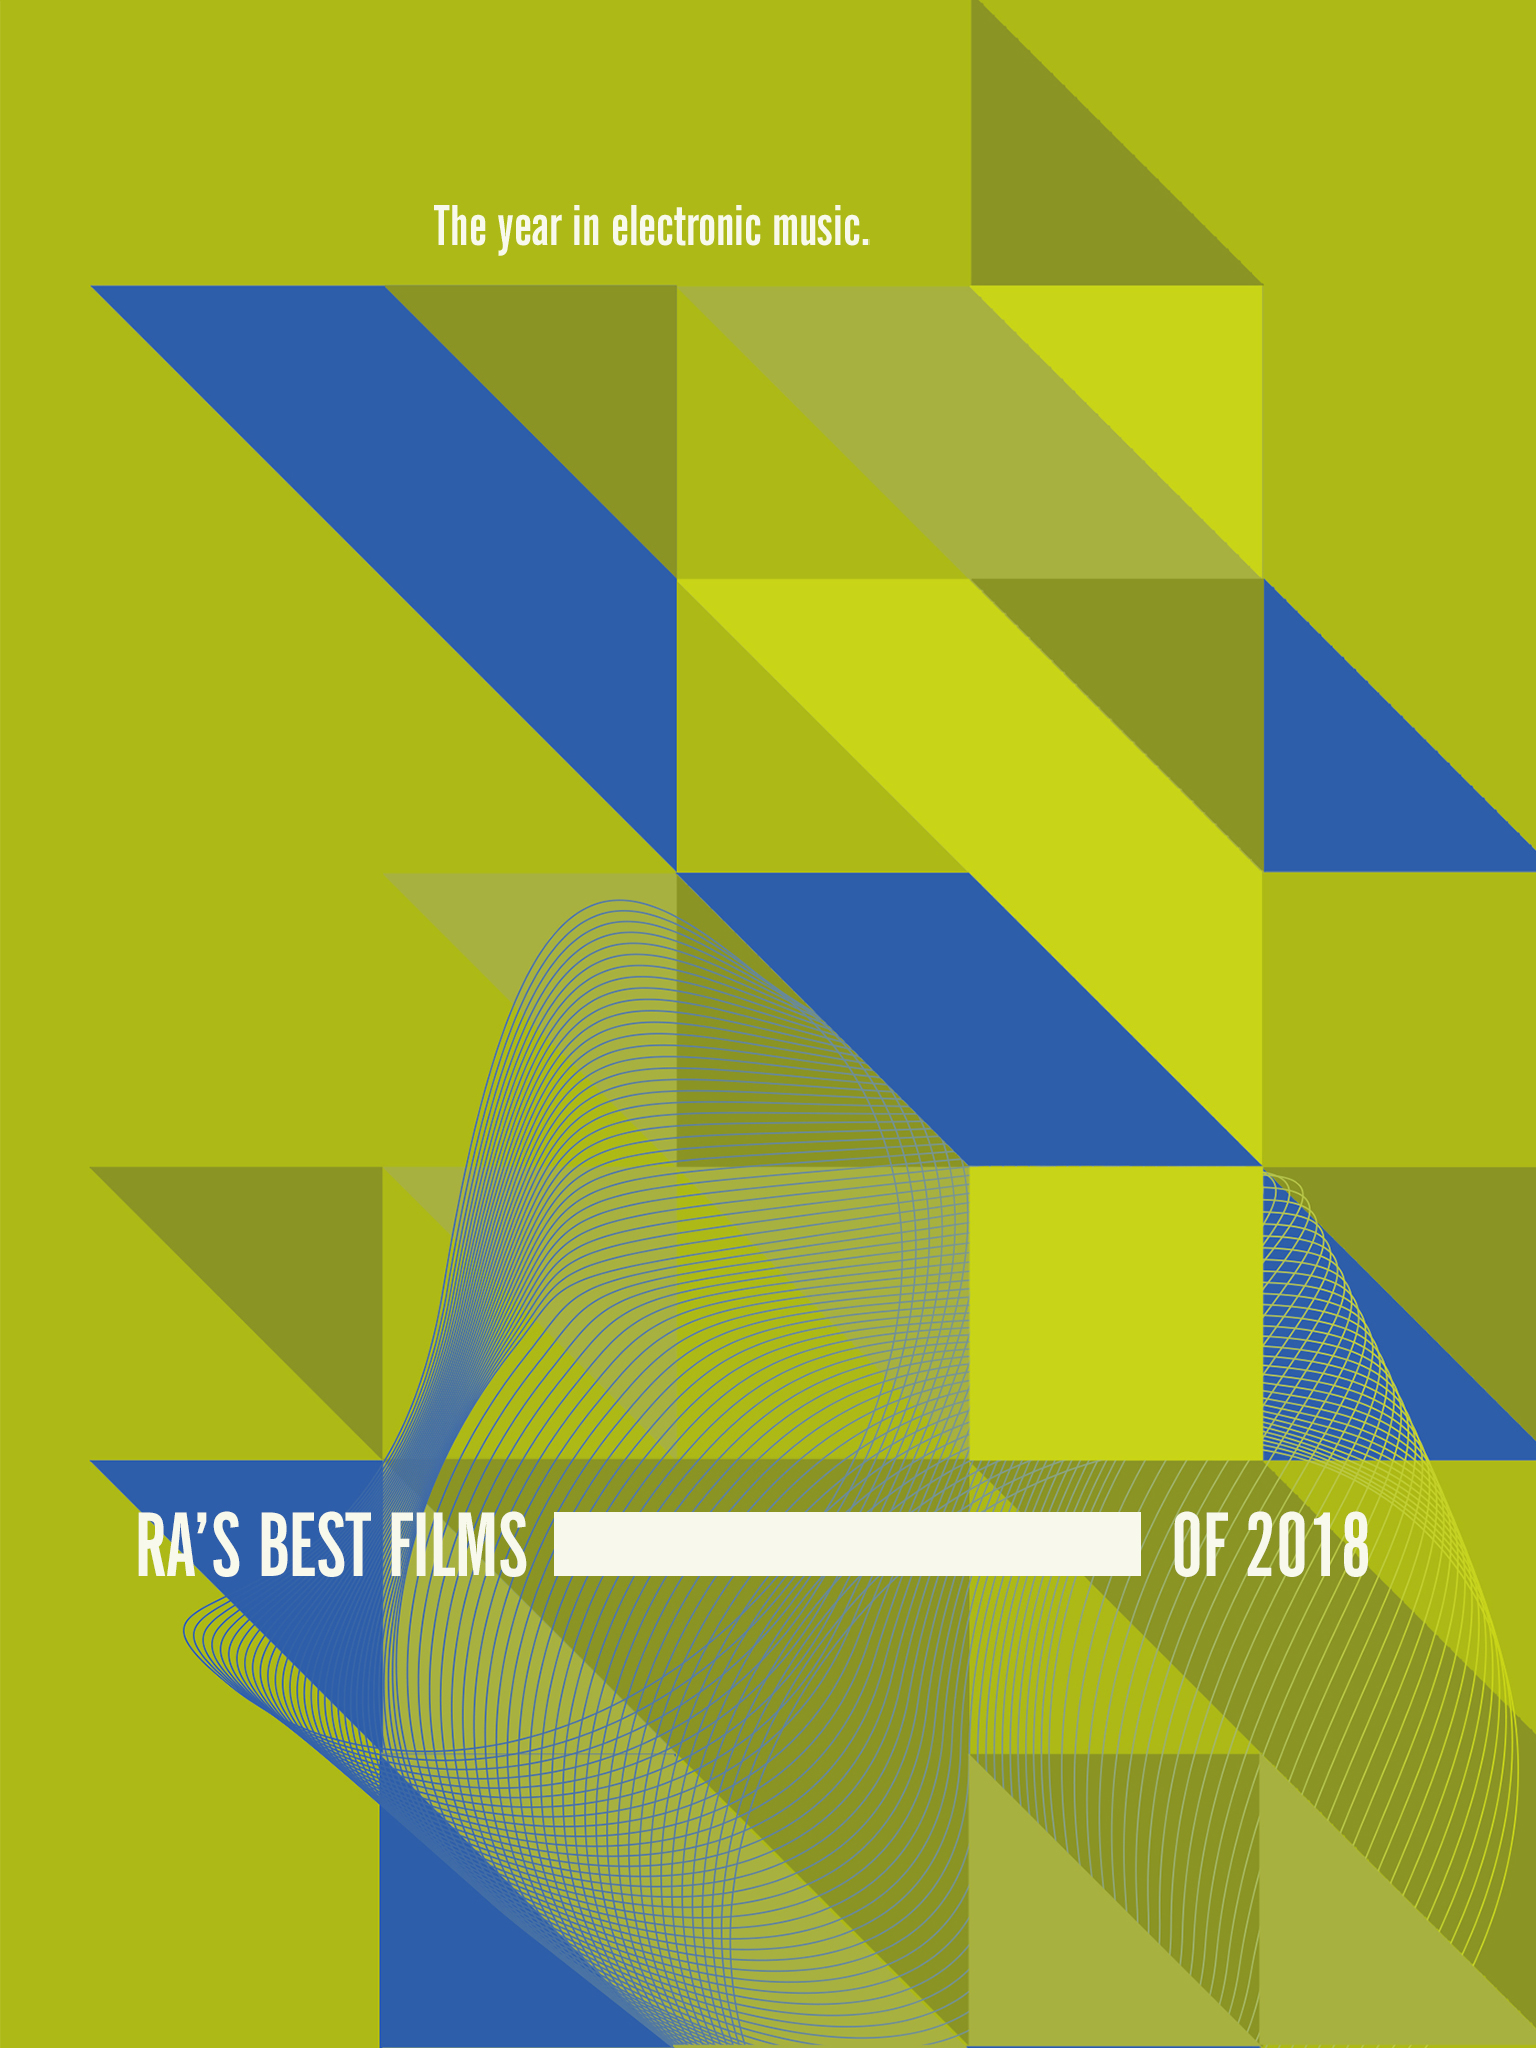 RA's best films of 2018